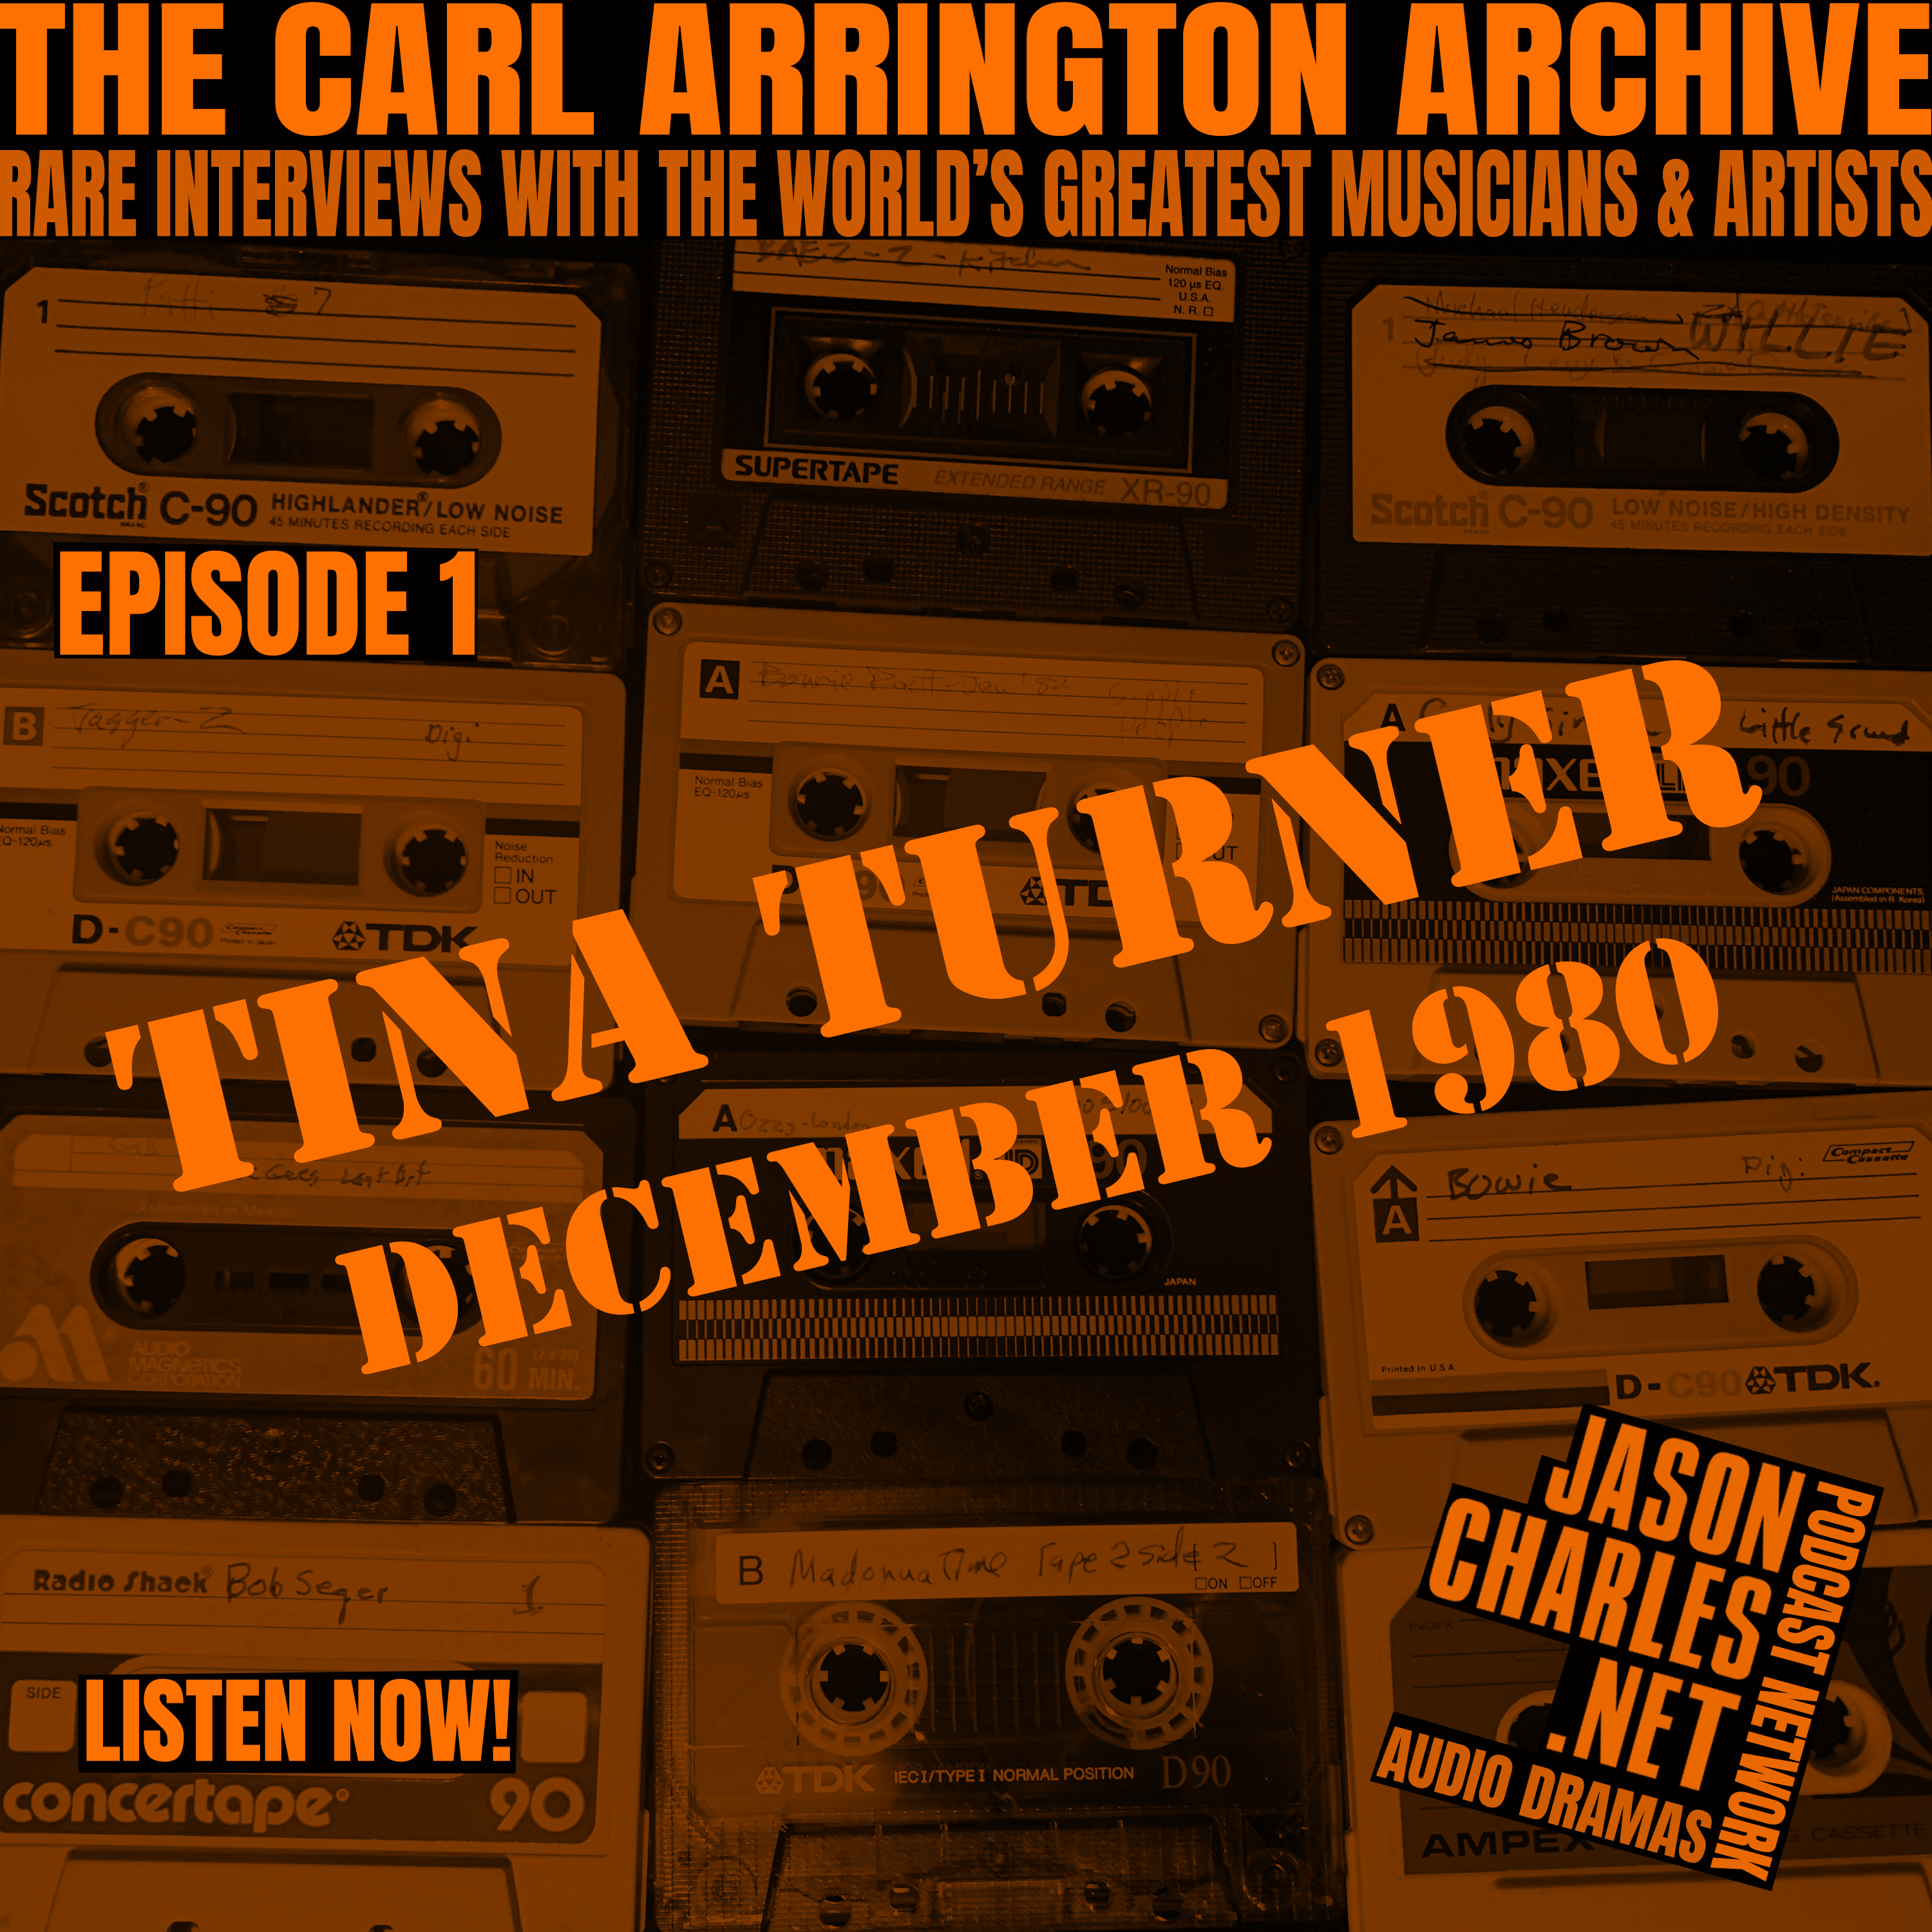 THE CARL ARRINGTON ARCHIVE Episode 1 TINA TURNER 1980